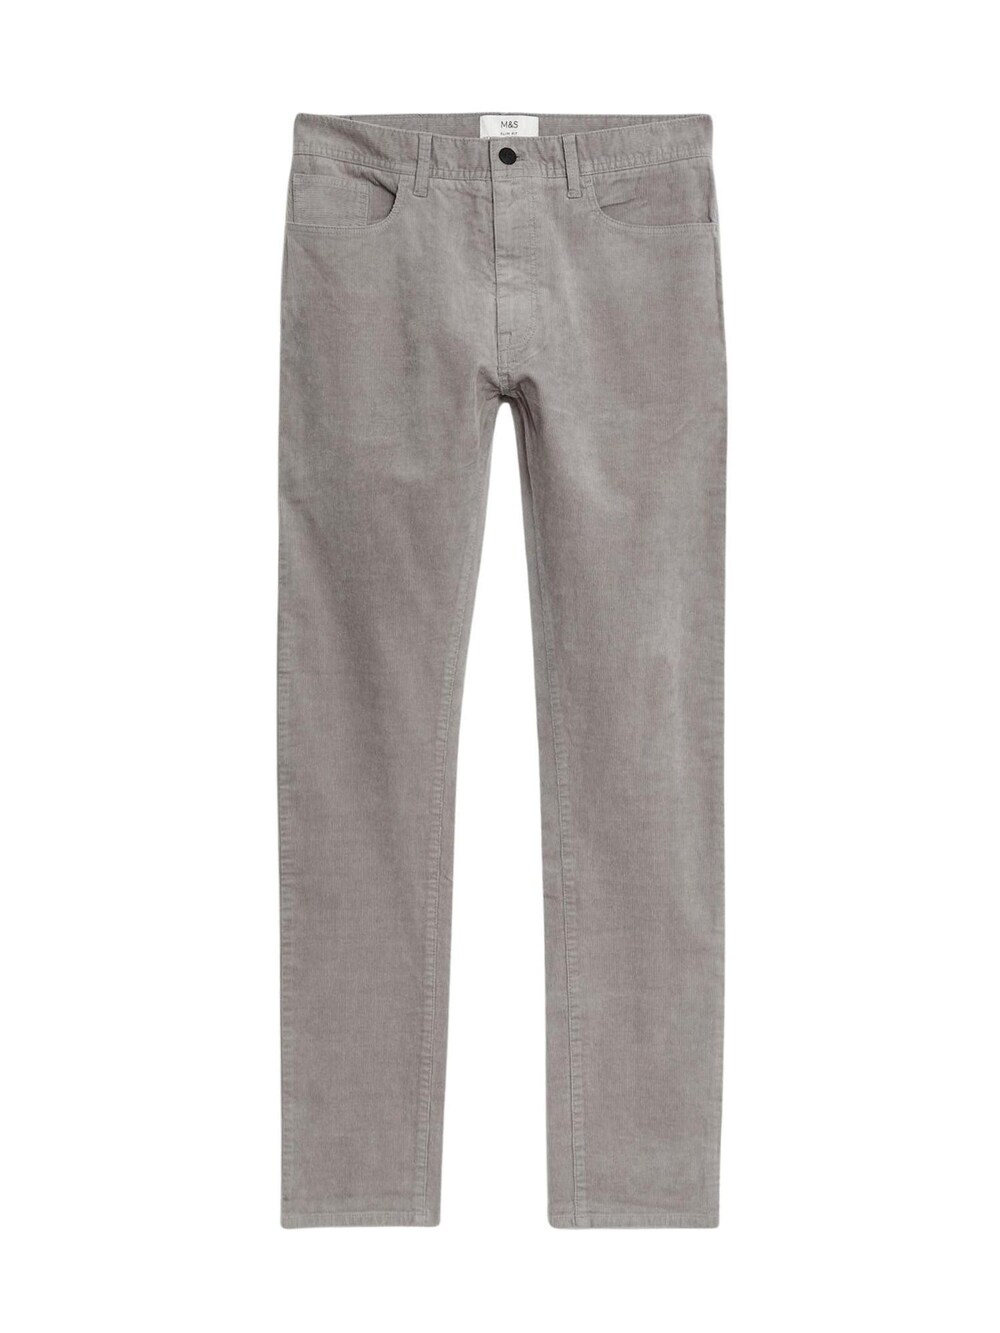 Узкие брюки Marks & Spencer, серый